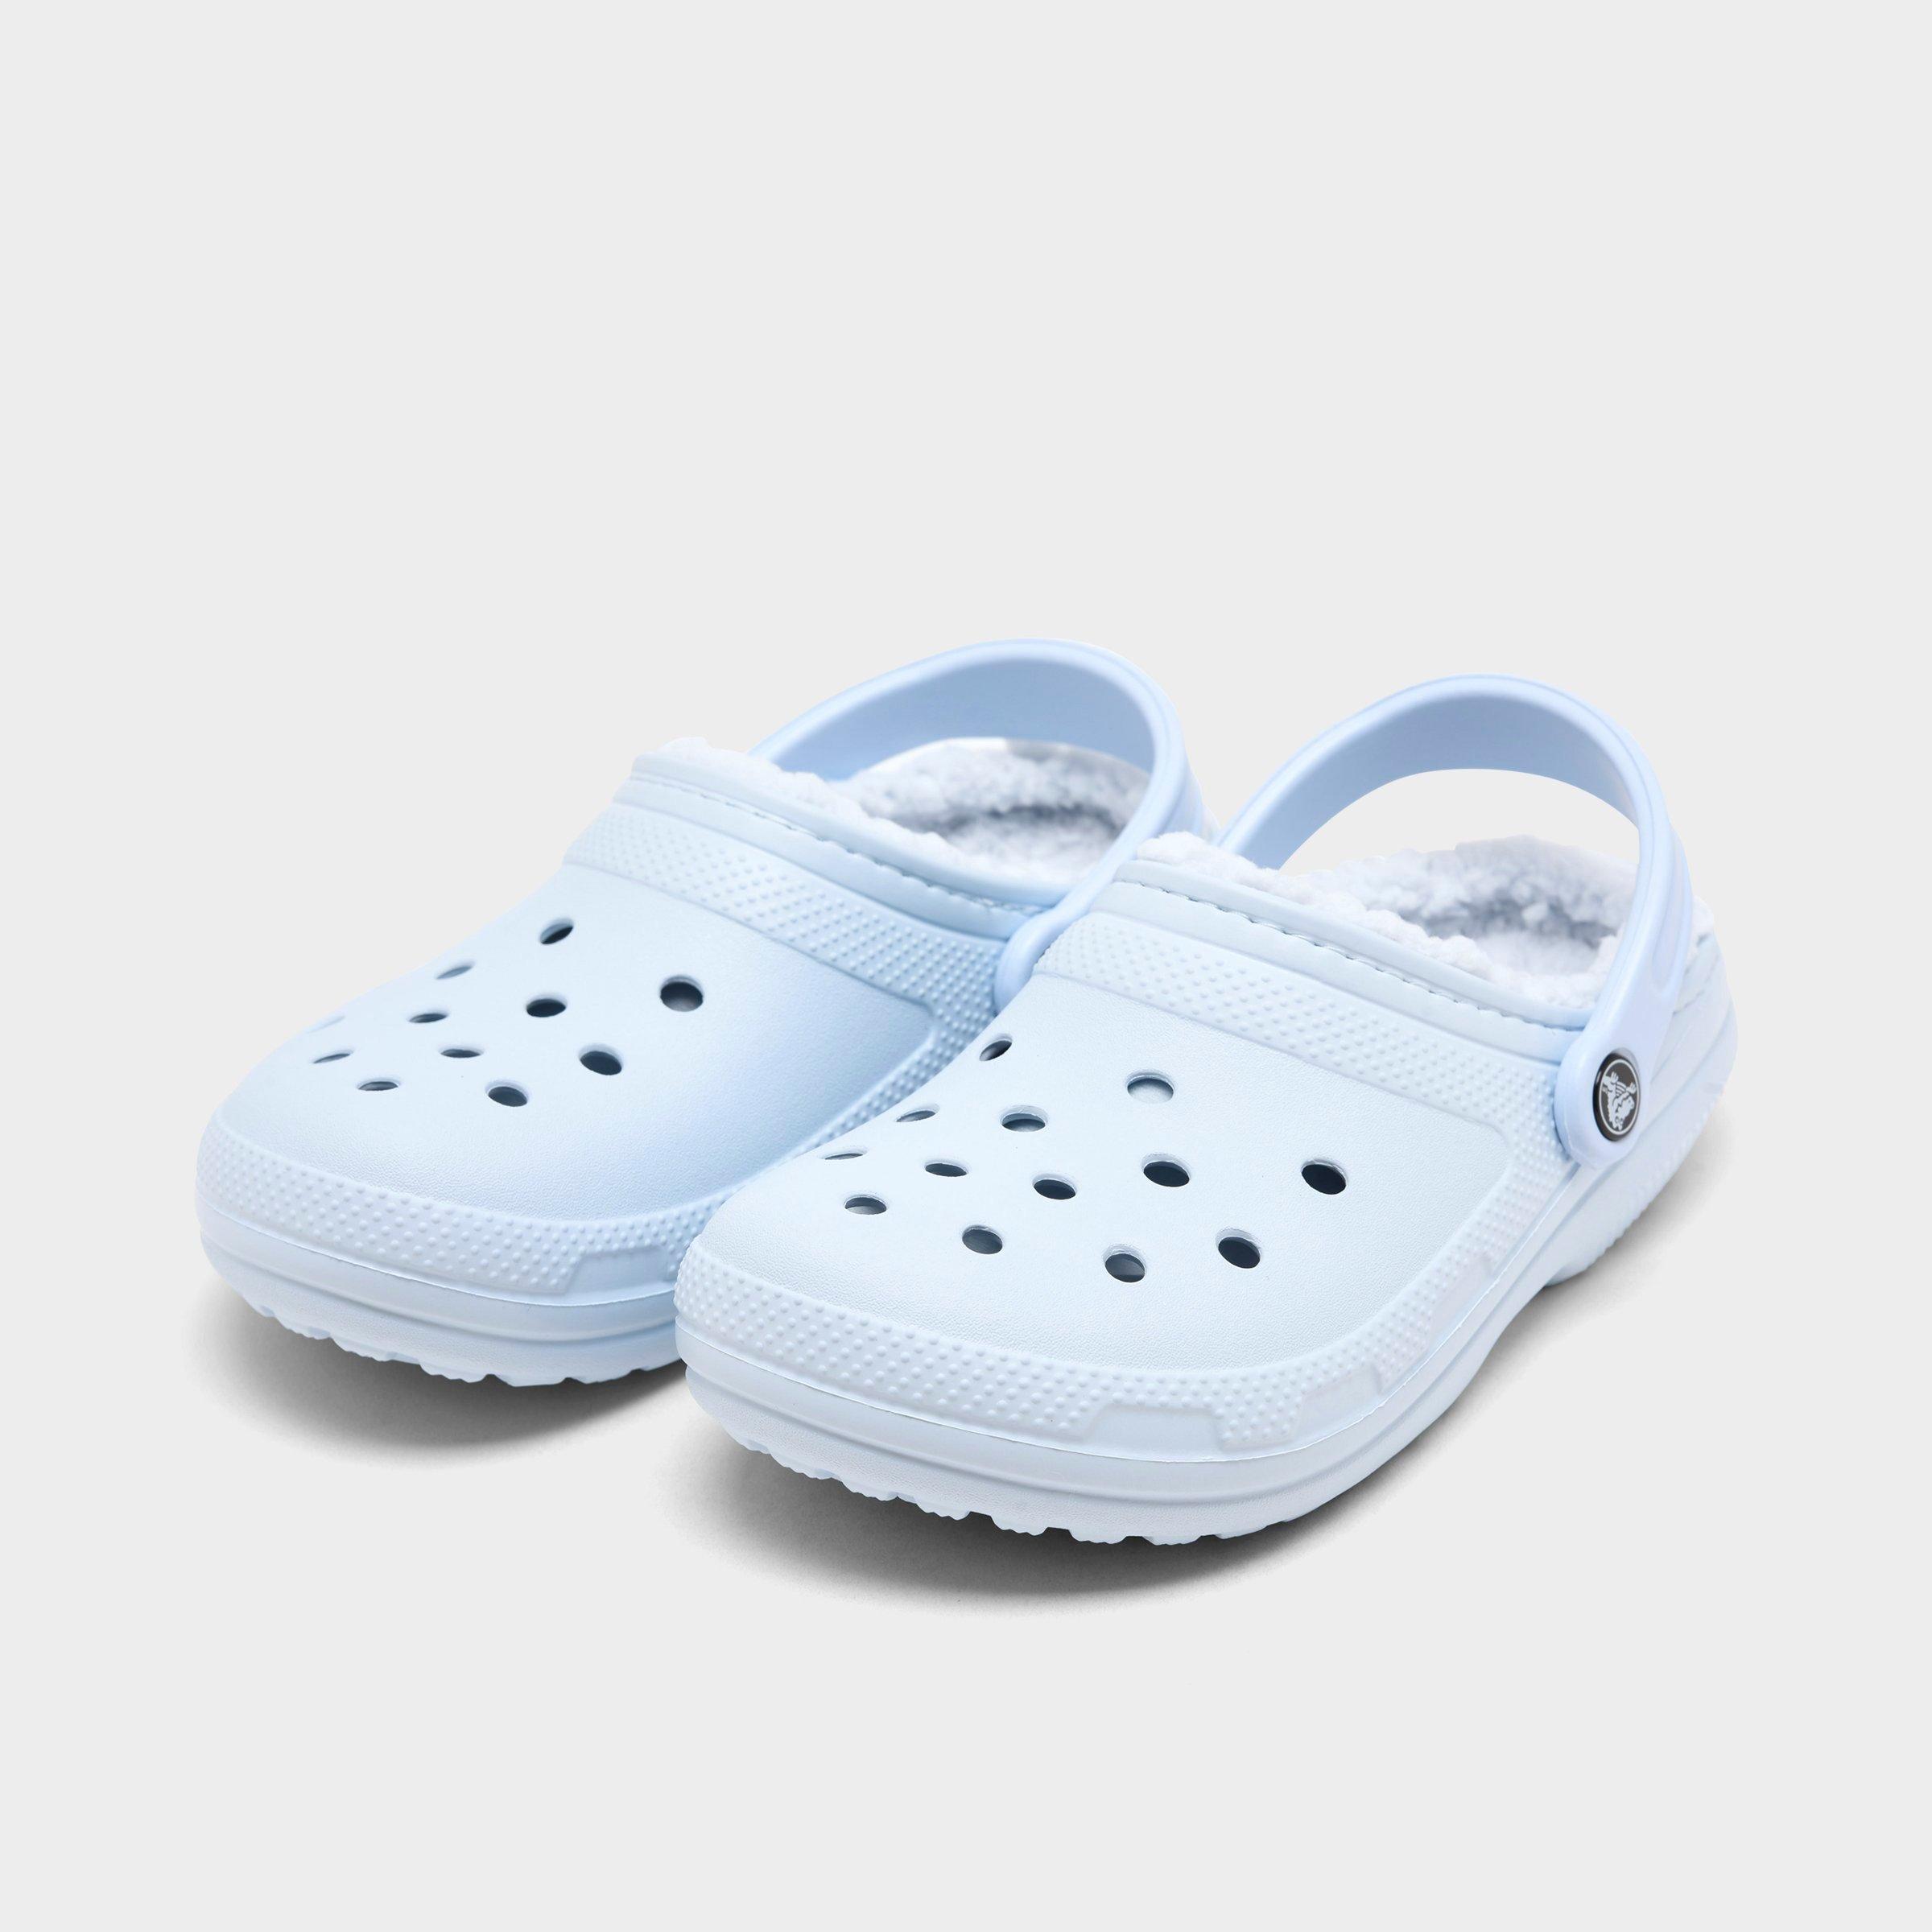 crocs with fur blue